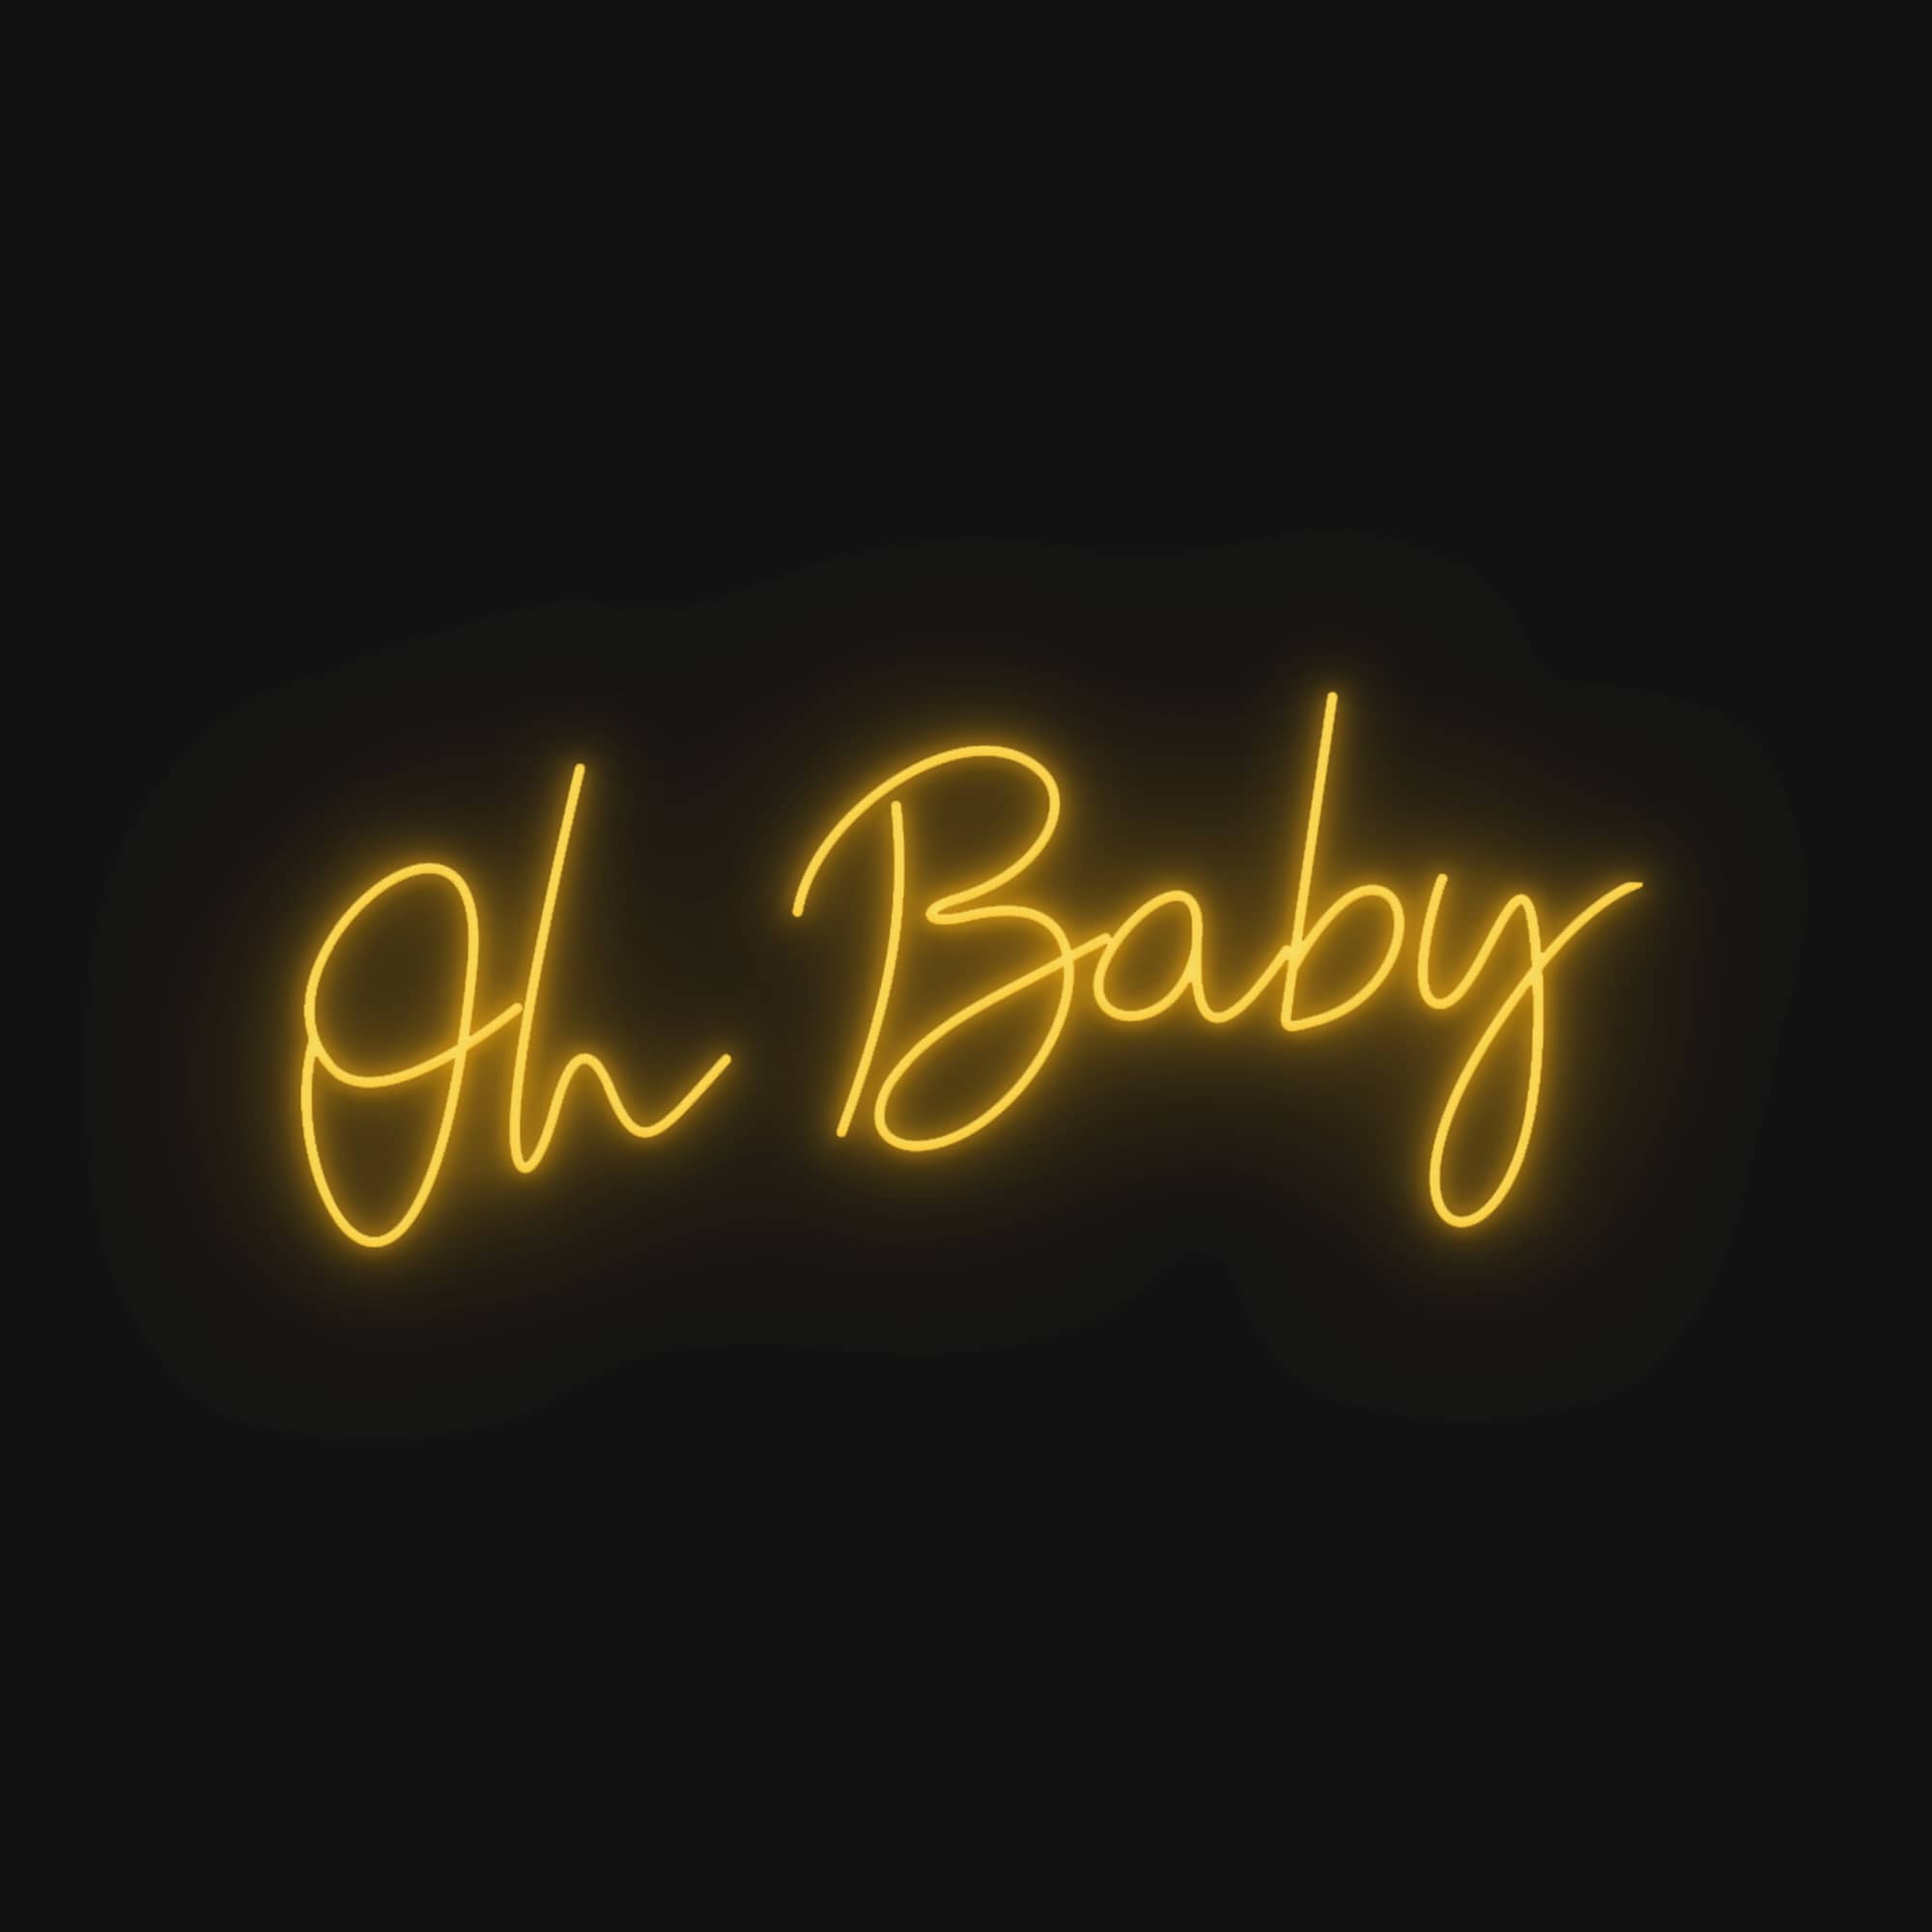 Oh Baby - Neon Mural